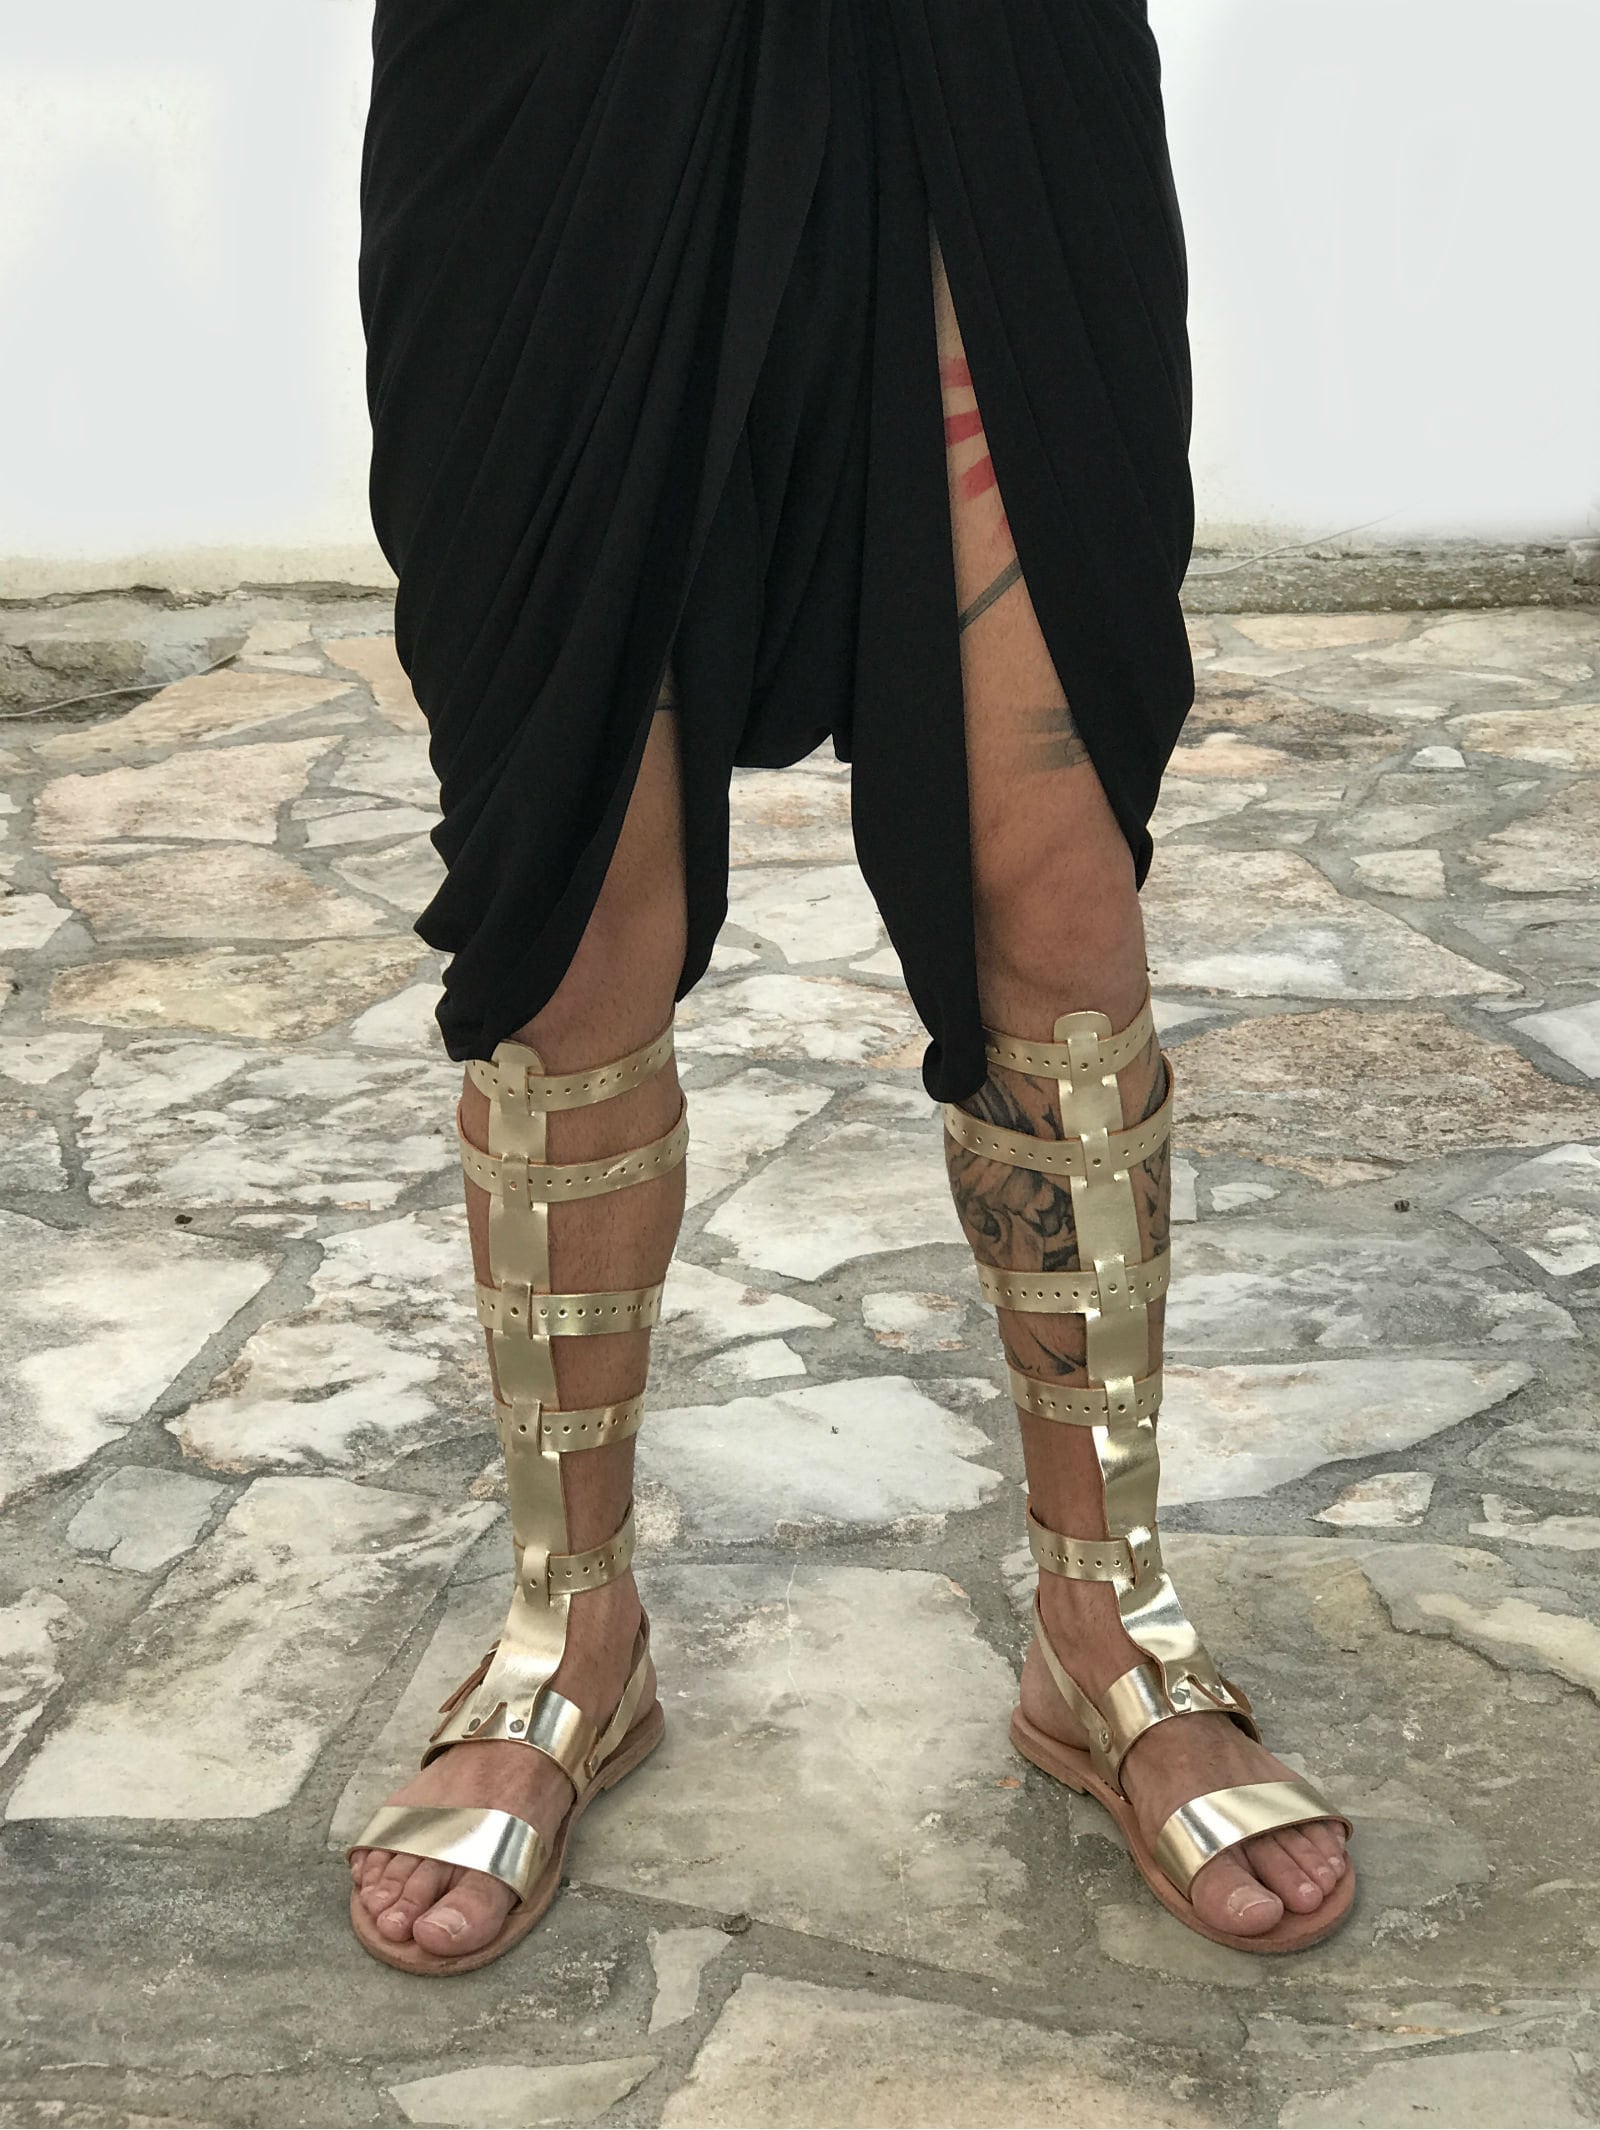 NadiaBodikian Men's Tall Knee Length Gladiator Sandals